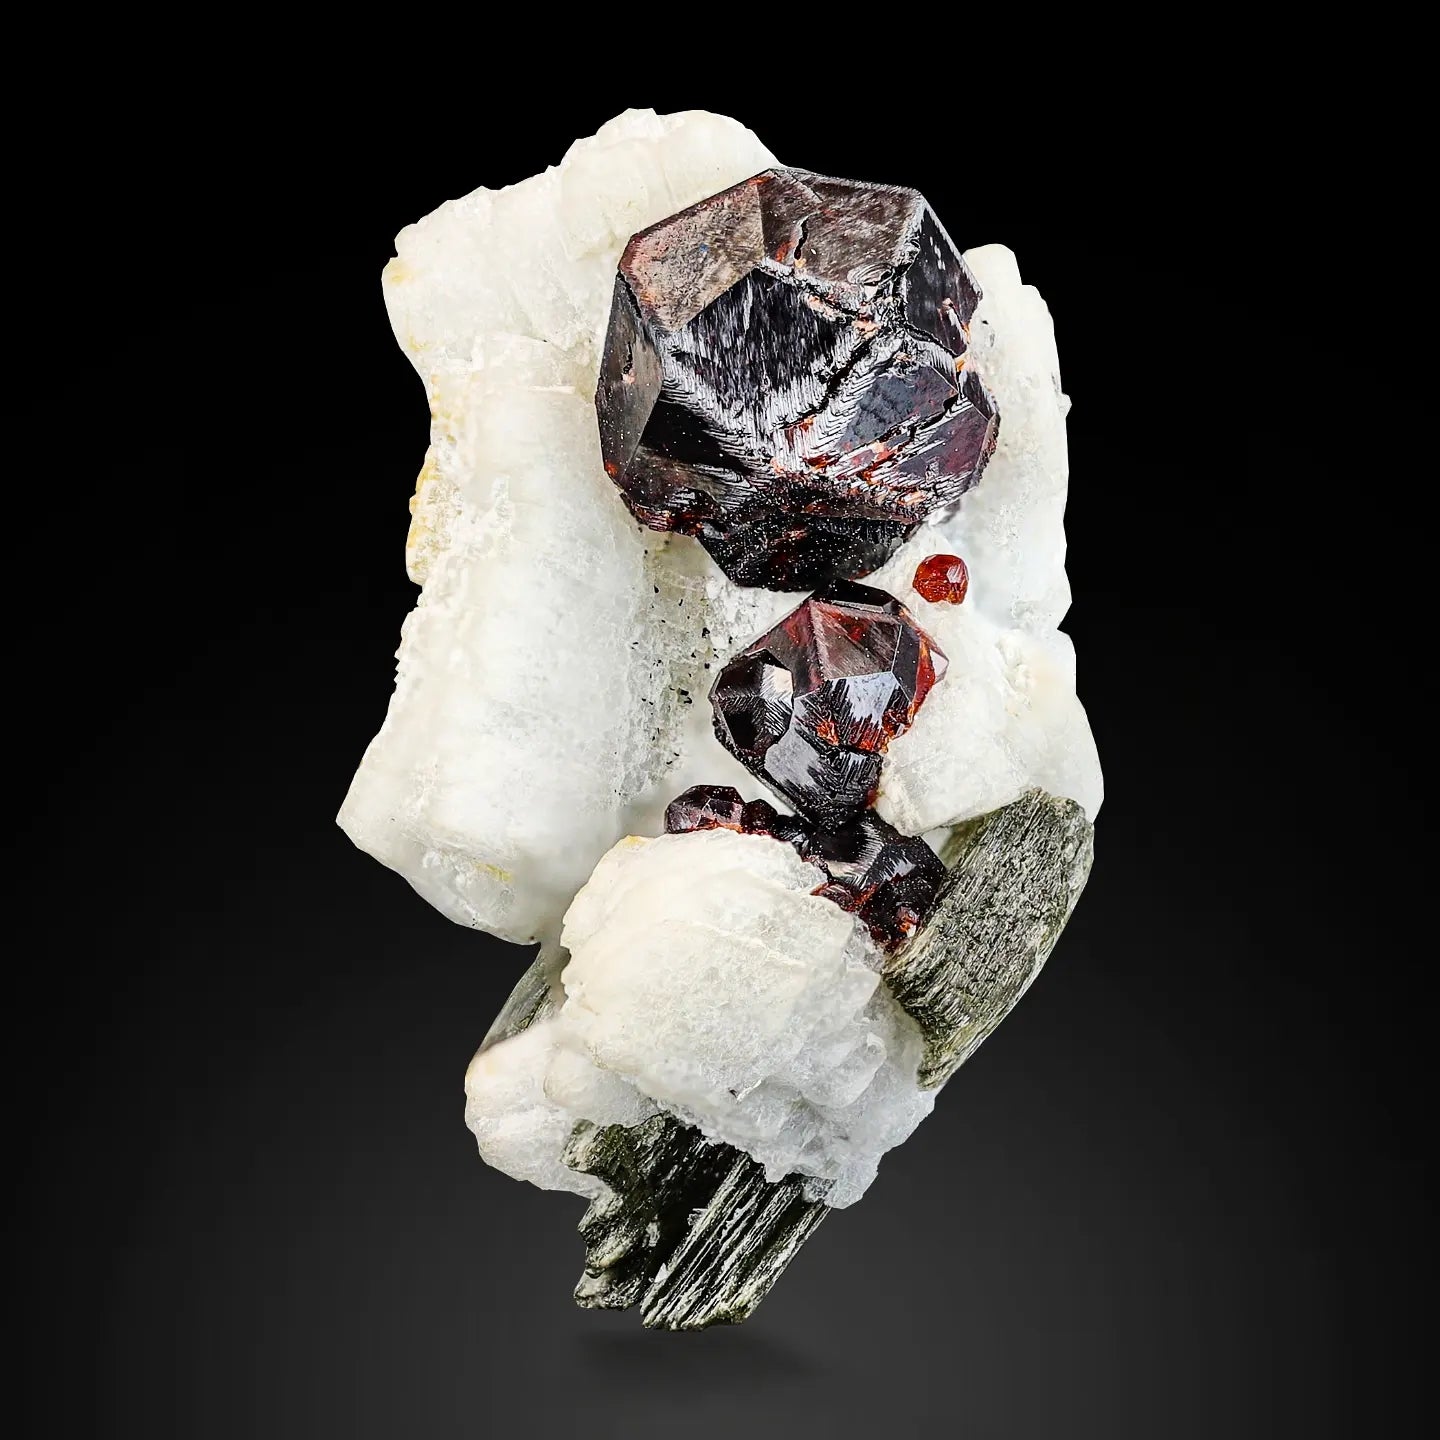 Gorgeous group of Spessertine Garnet crystals on Albite Muscovite from Skardu, Pakistan